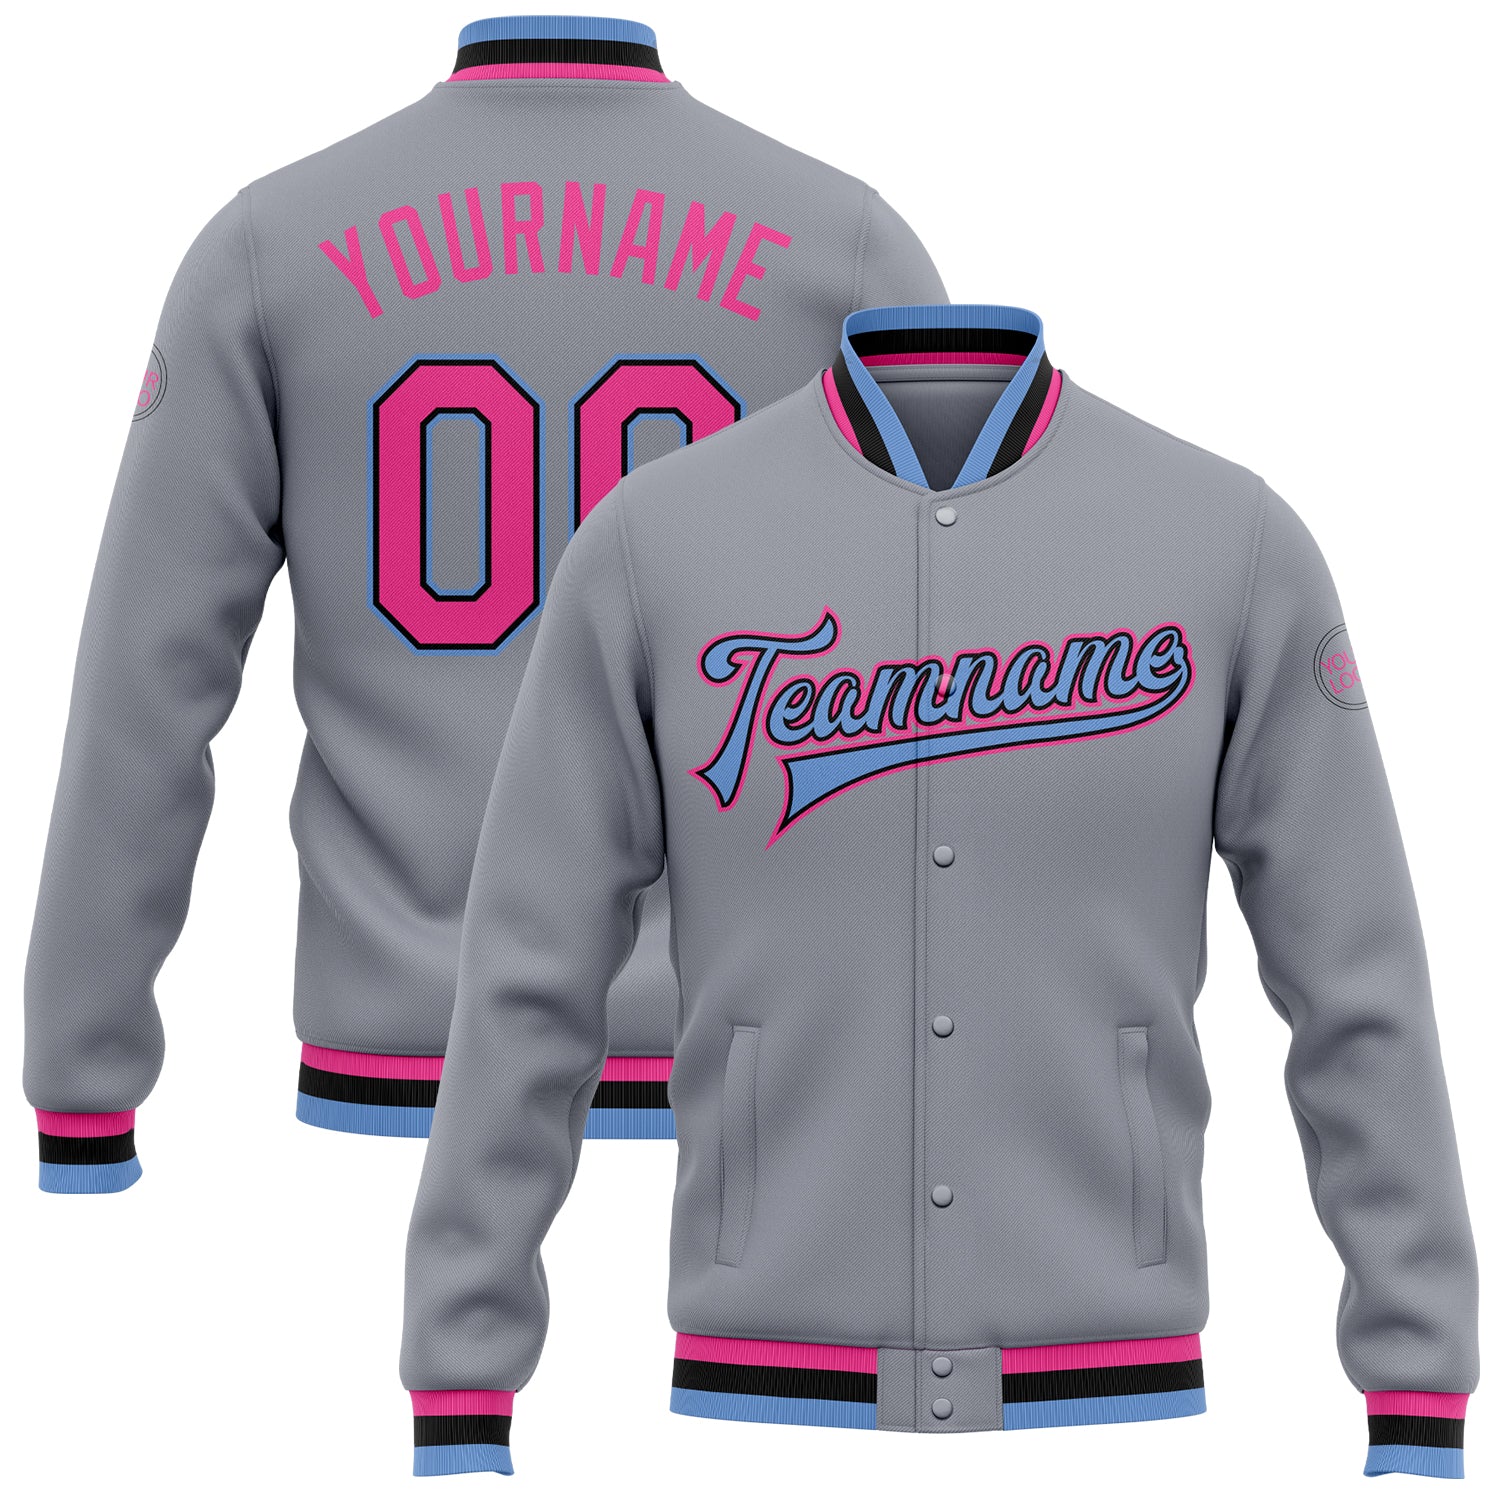 pink baseball jacket